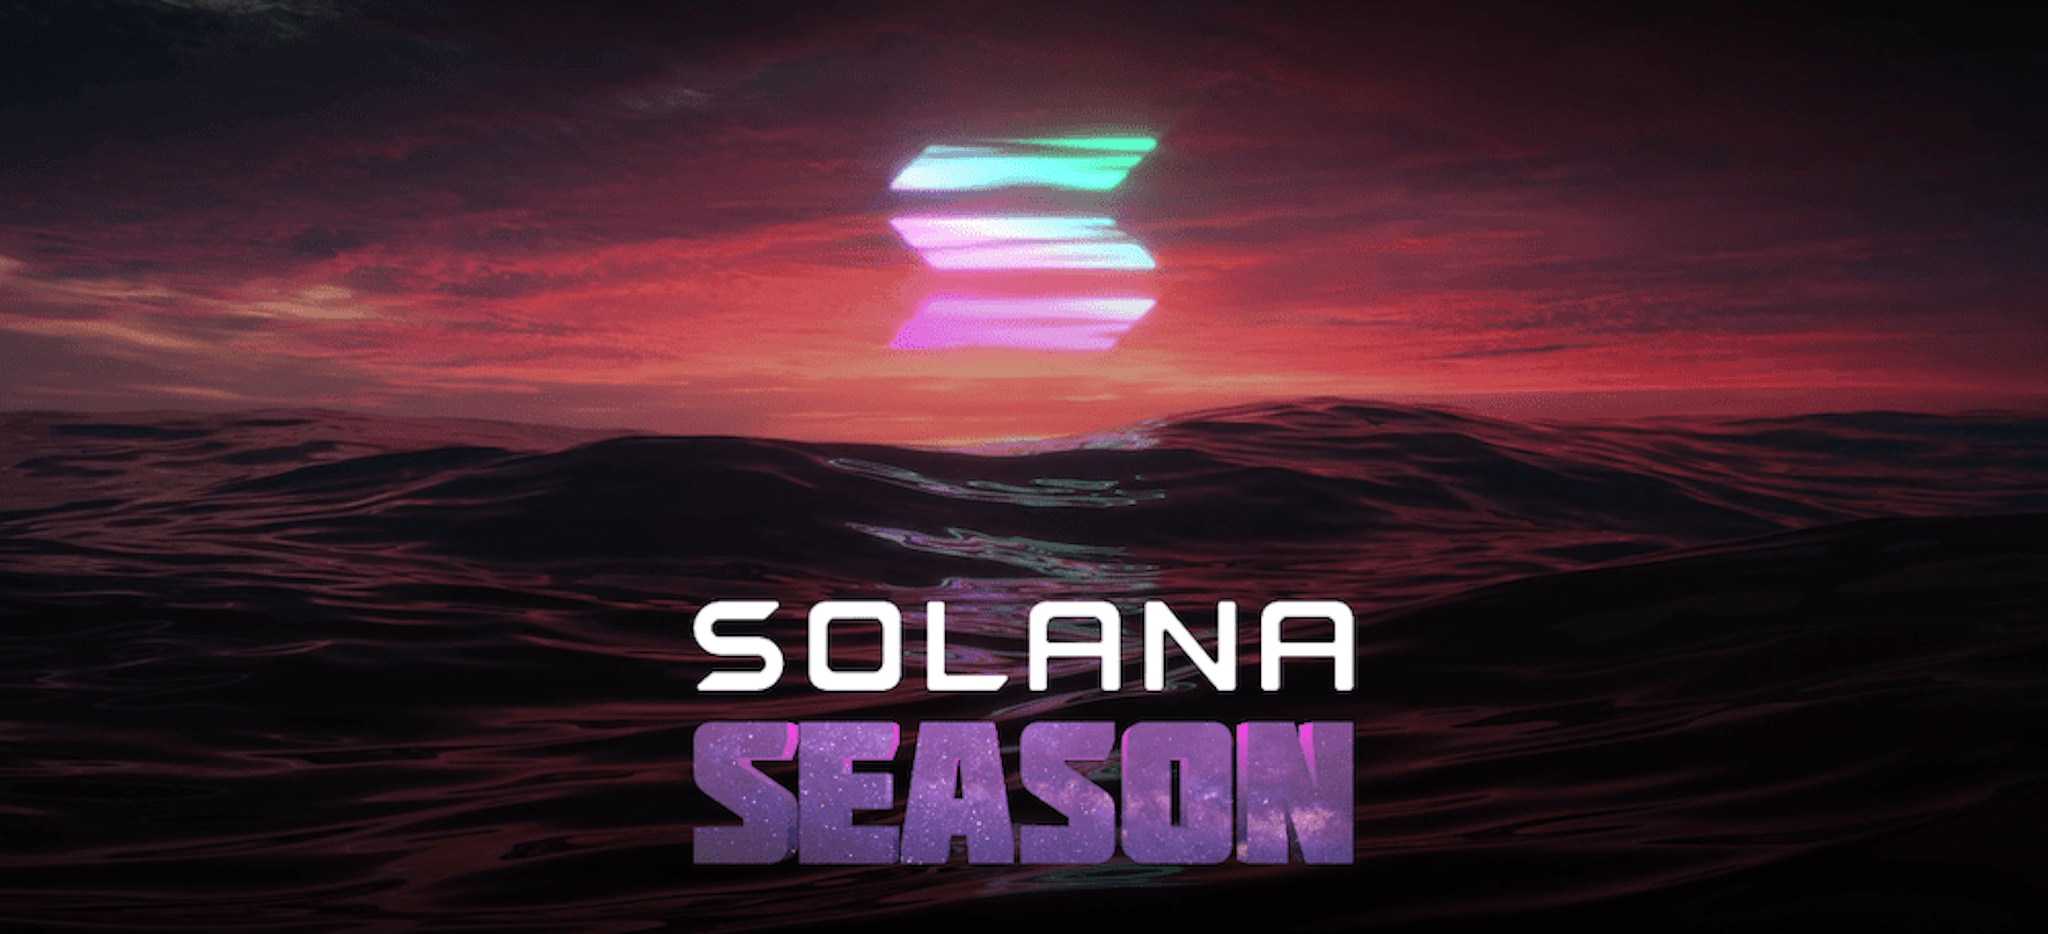 Solana Season Hackathon